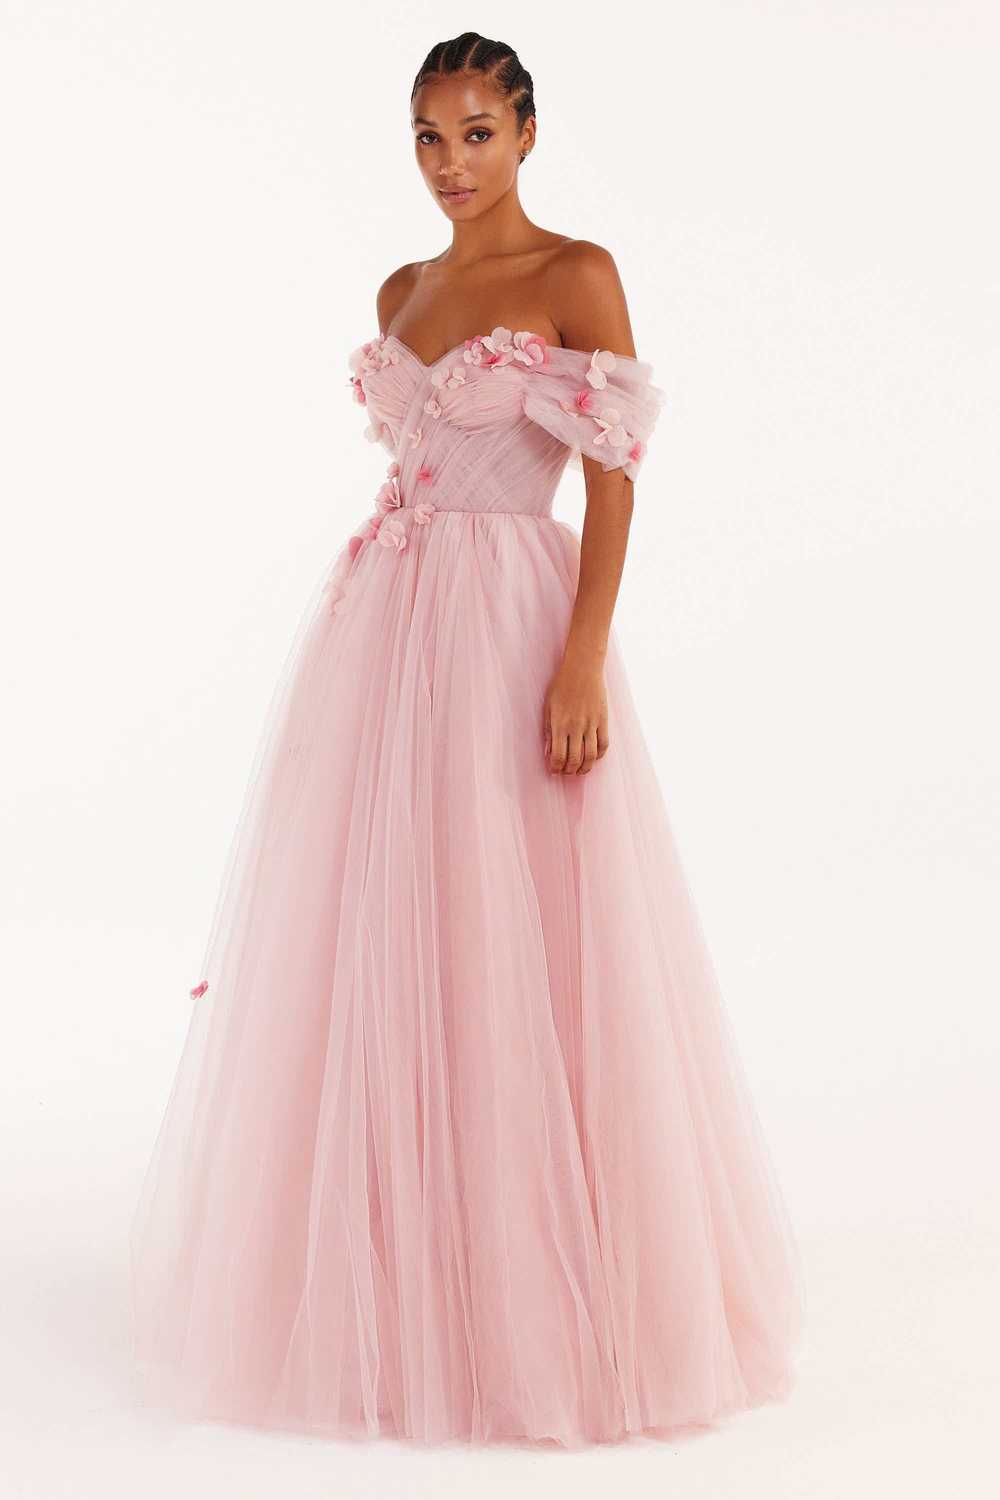 Milla Misty rose tulle princess-like dress - image 2